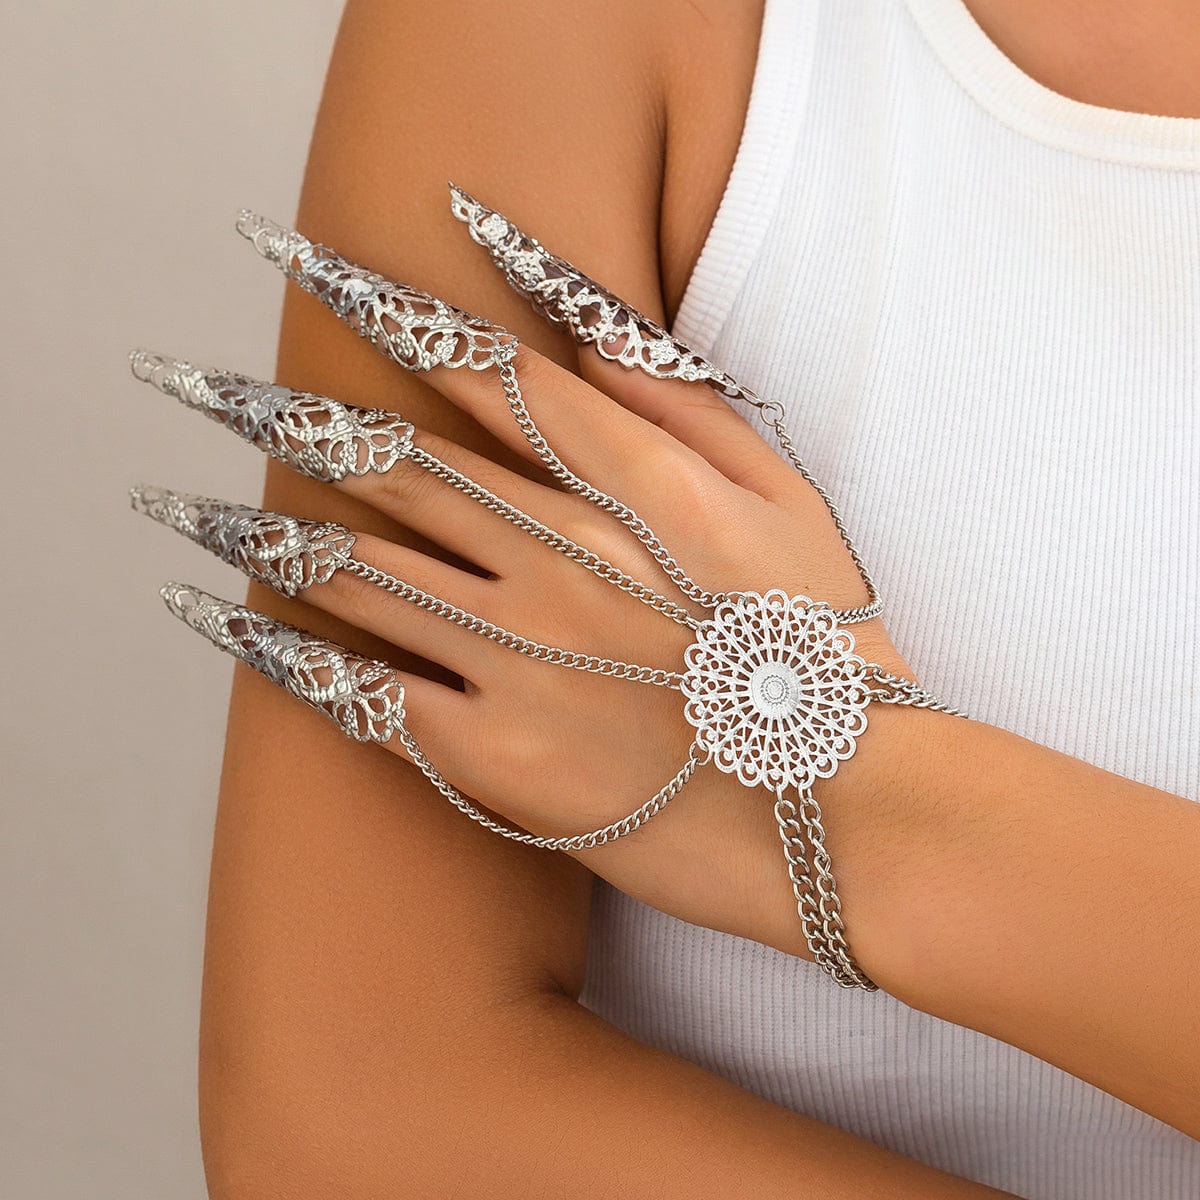 Gothic Flower Five Finger Armor Nails Mittens Bracelet - ArtGalleryZen